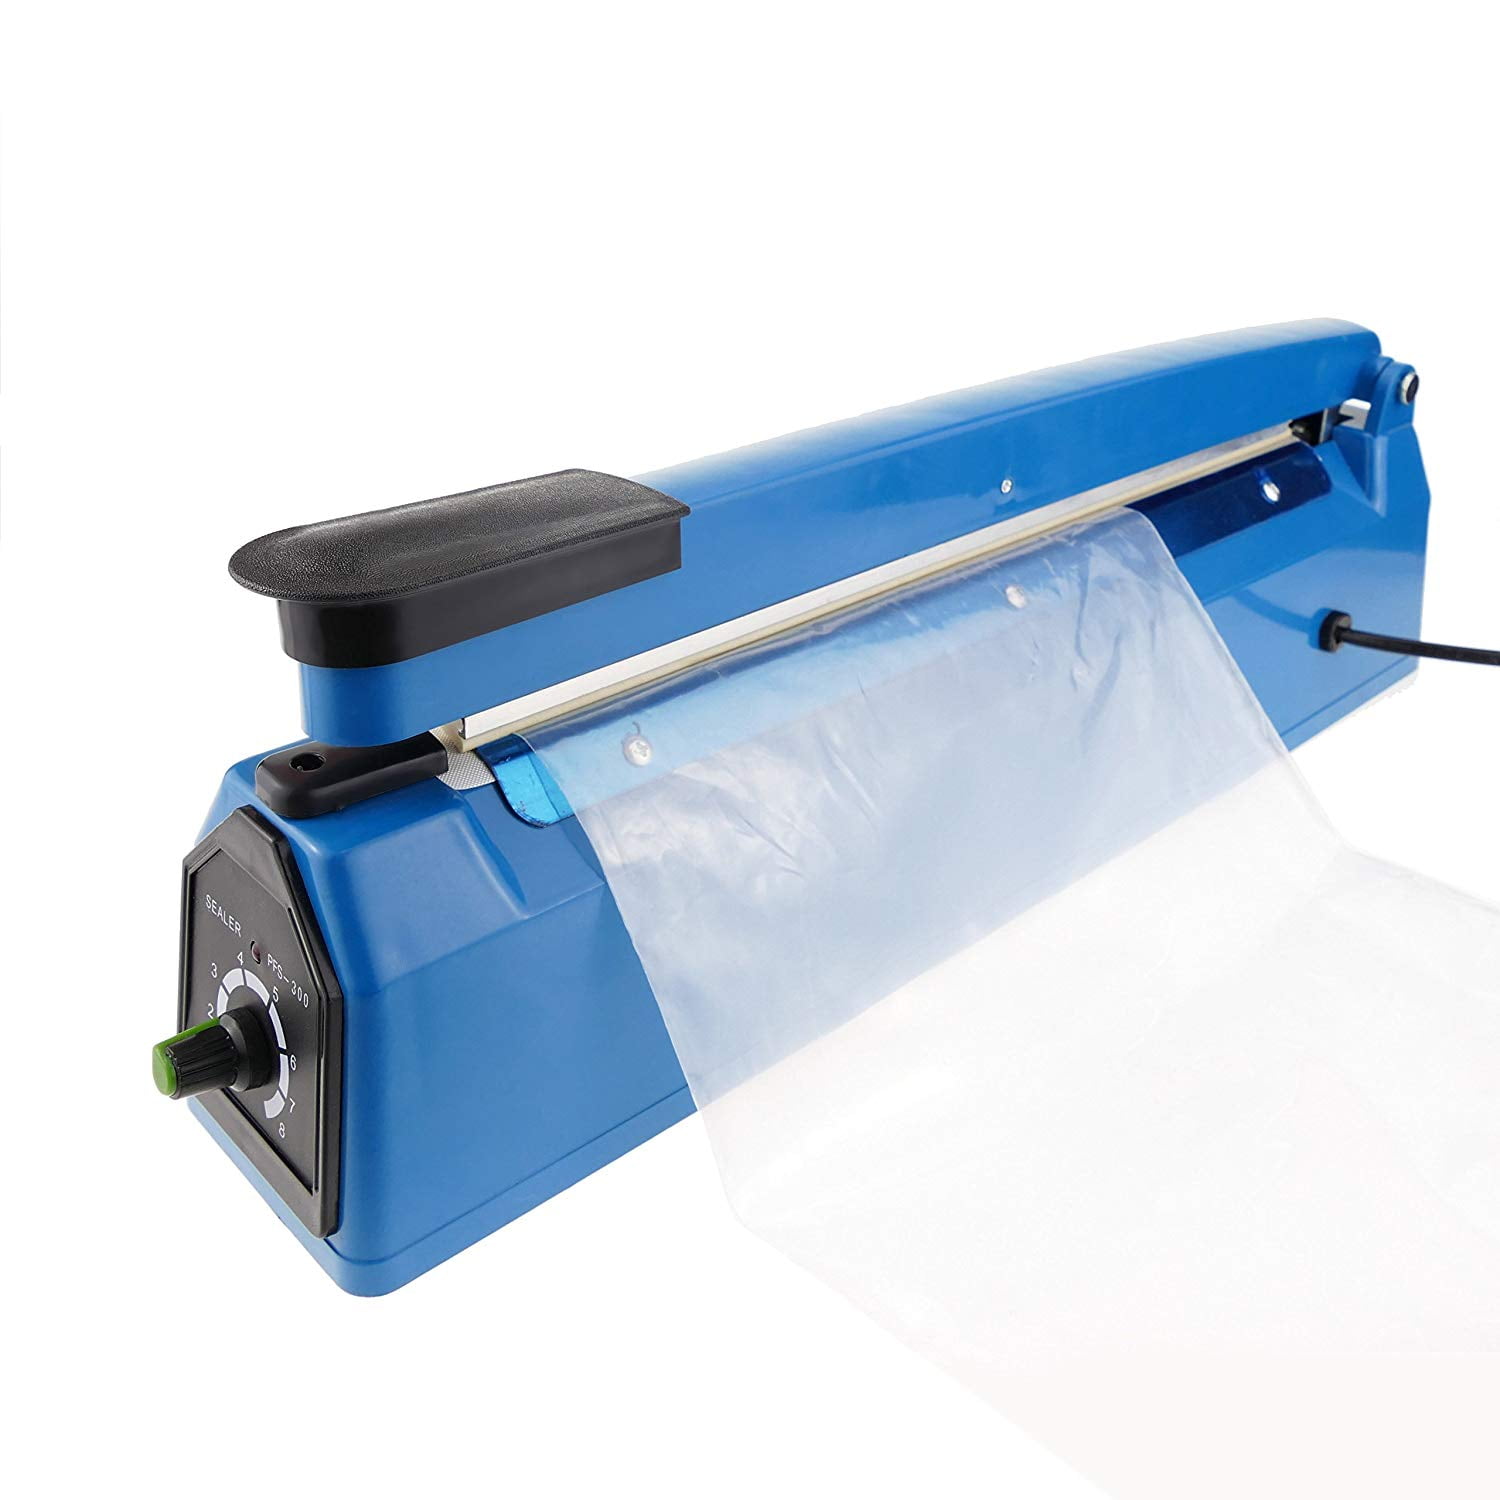 VOTOER Manual Impulse Bag Hand Heat Sealer Machine Bag Sealer Heat Sealing Closer Tool Poly Tubing Plastic Bag 2 Free Replacement Kit 8 inch 